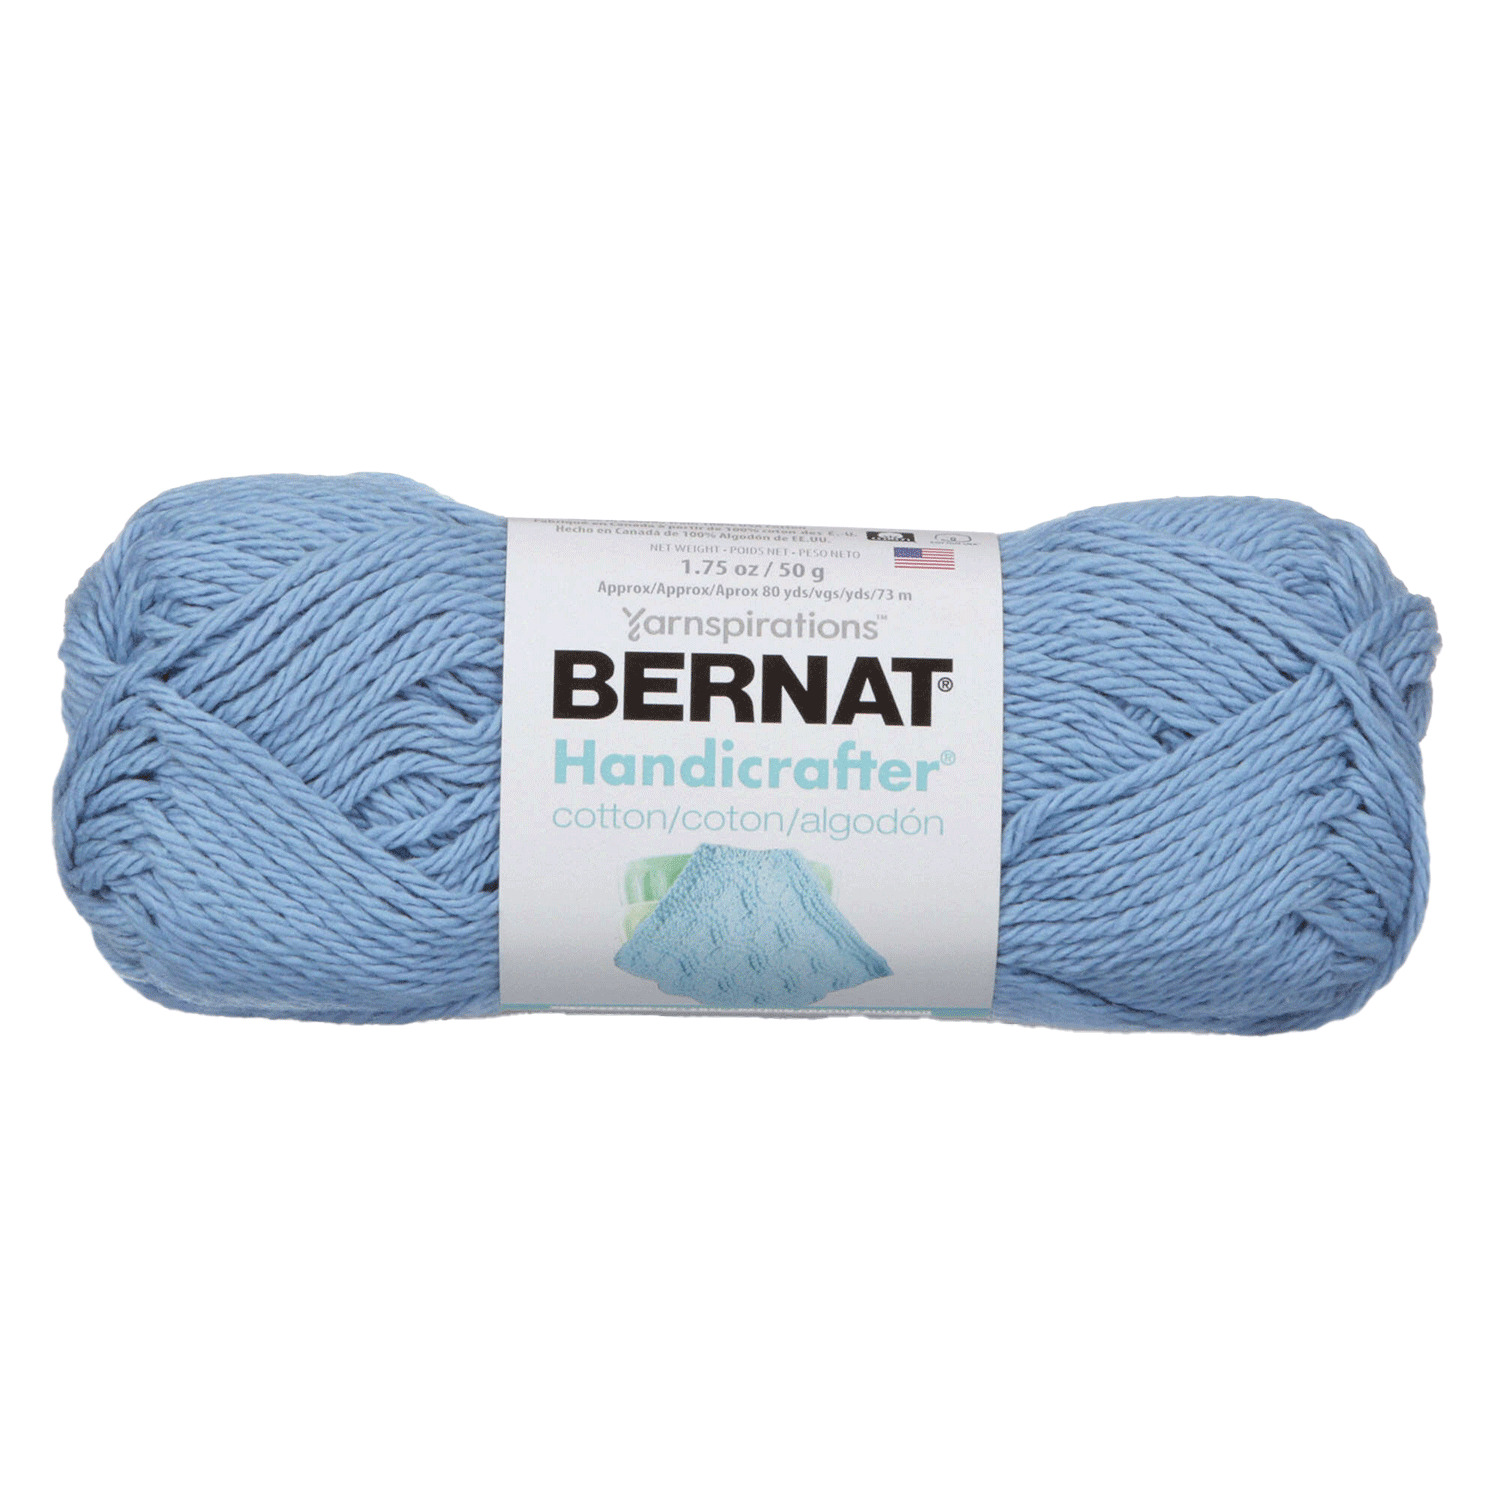 Bernat Handicrafter - Laine en coton, Bleu français